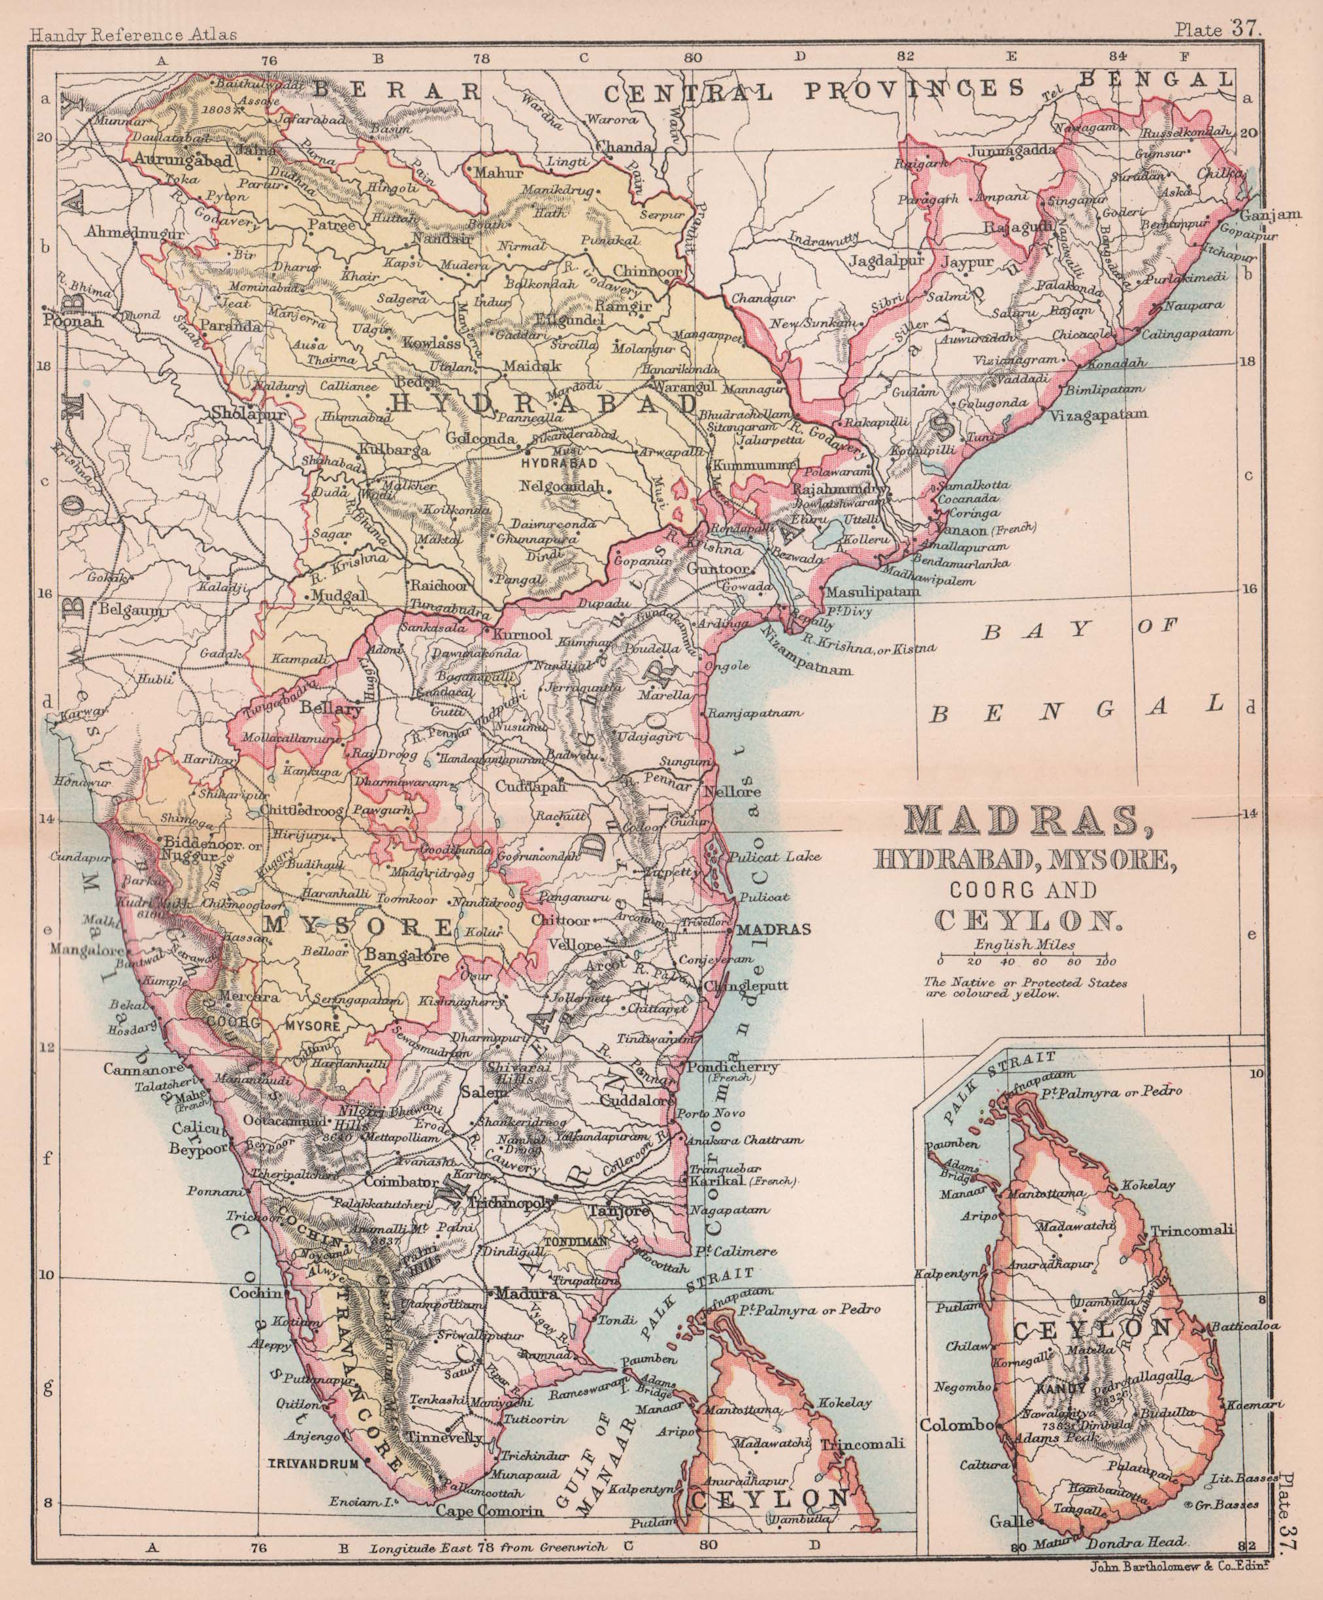 Associate Product British India South. Madras Hydrabad Mysore Coorg Ceylon. BARTHOLOMEW 1893 map